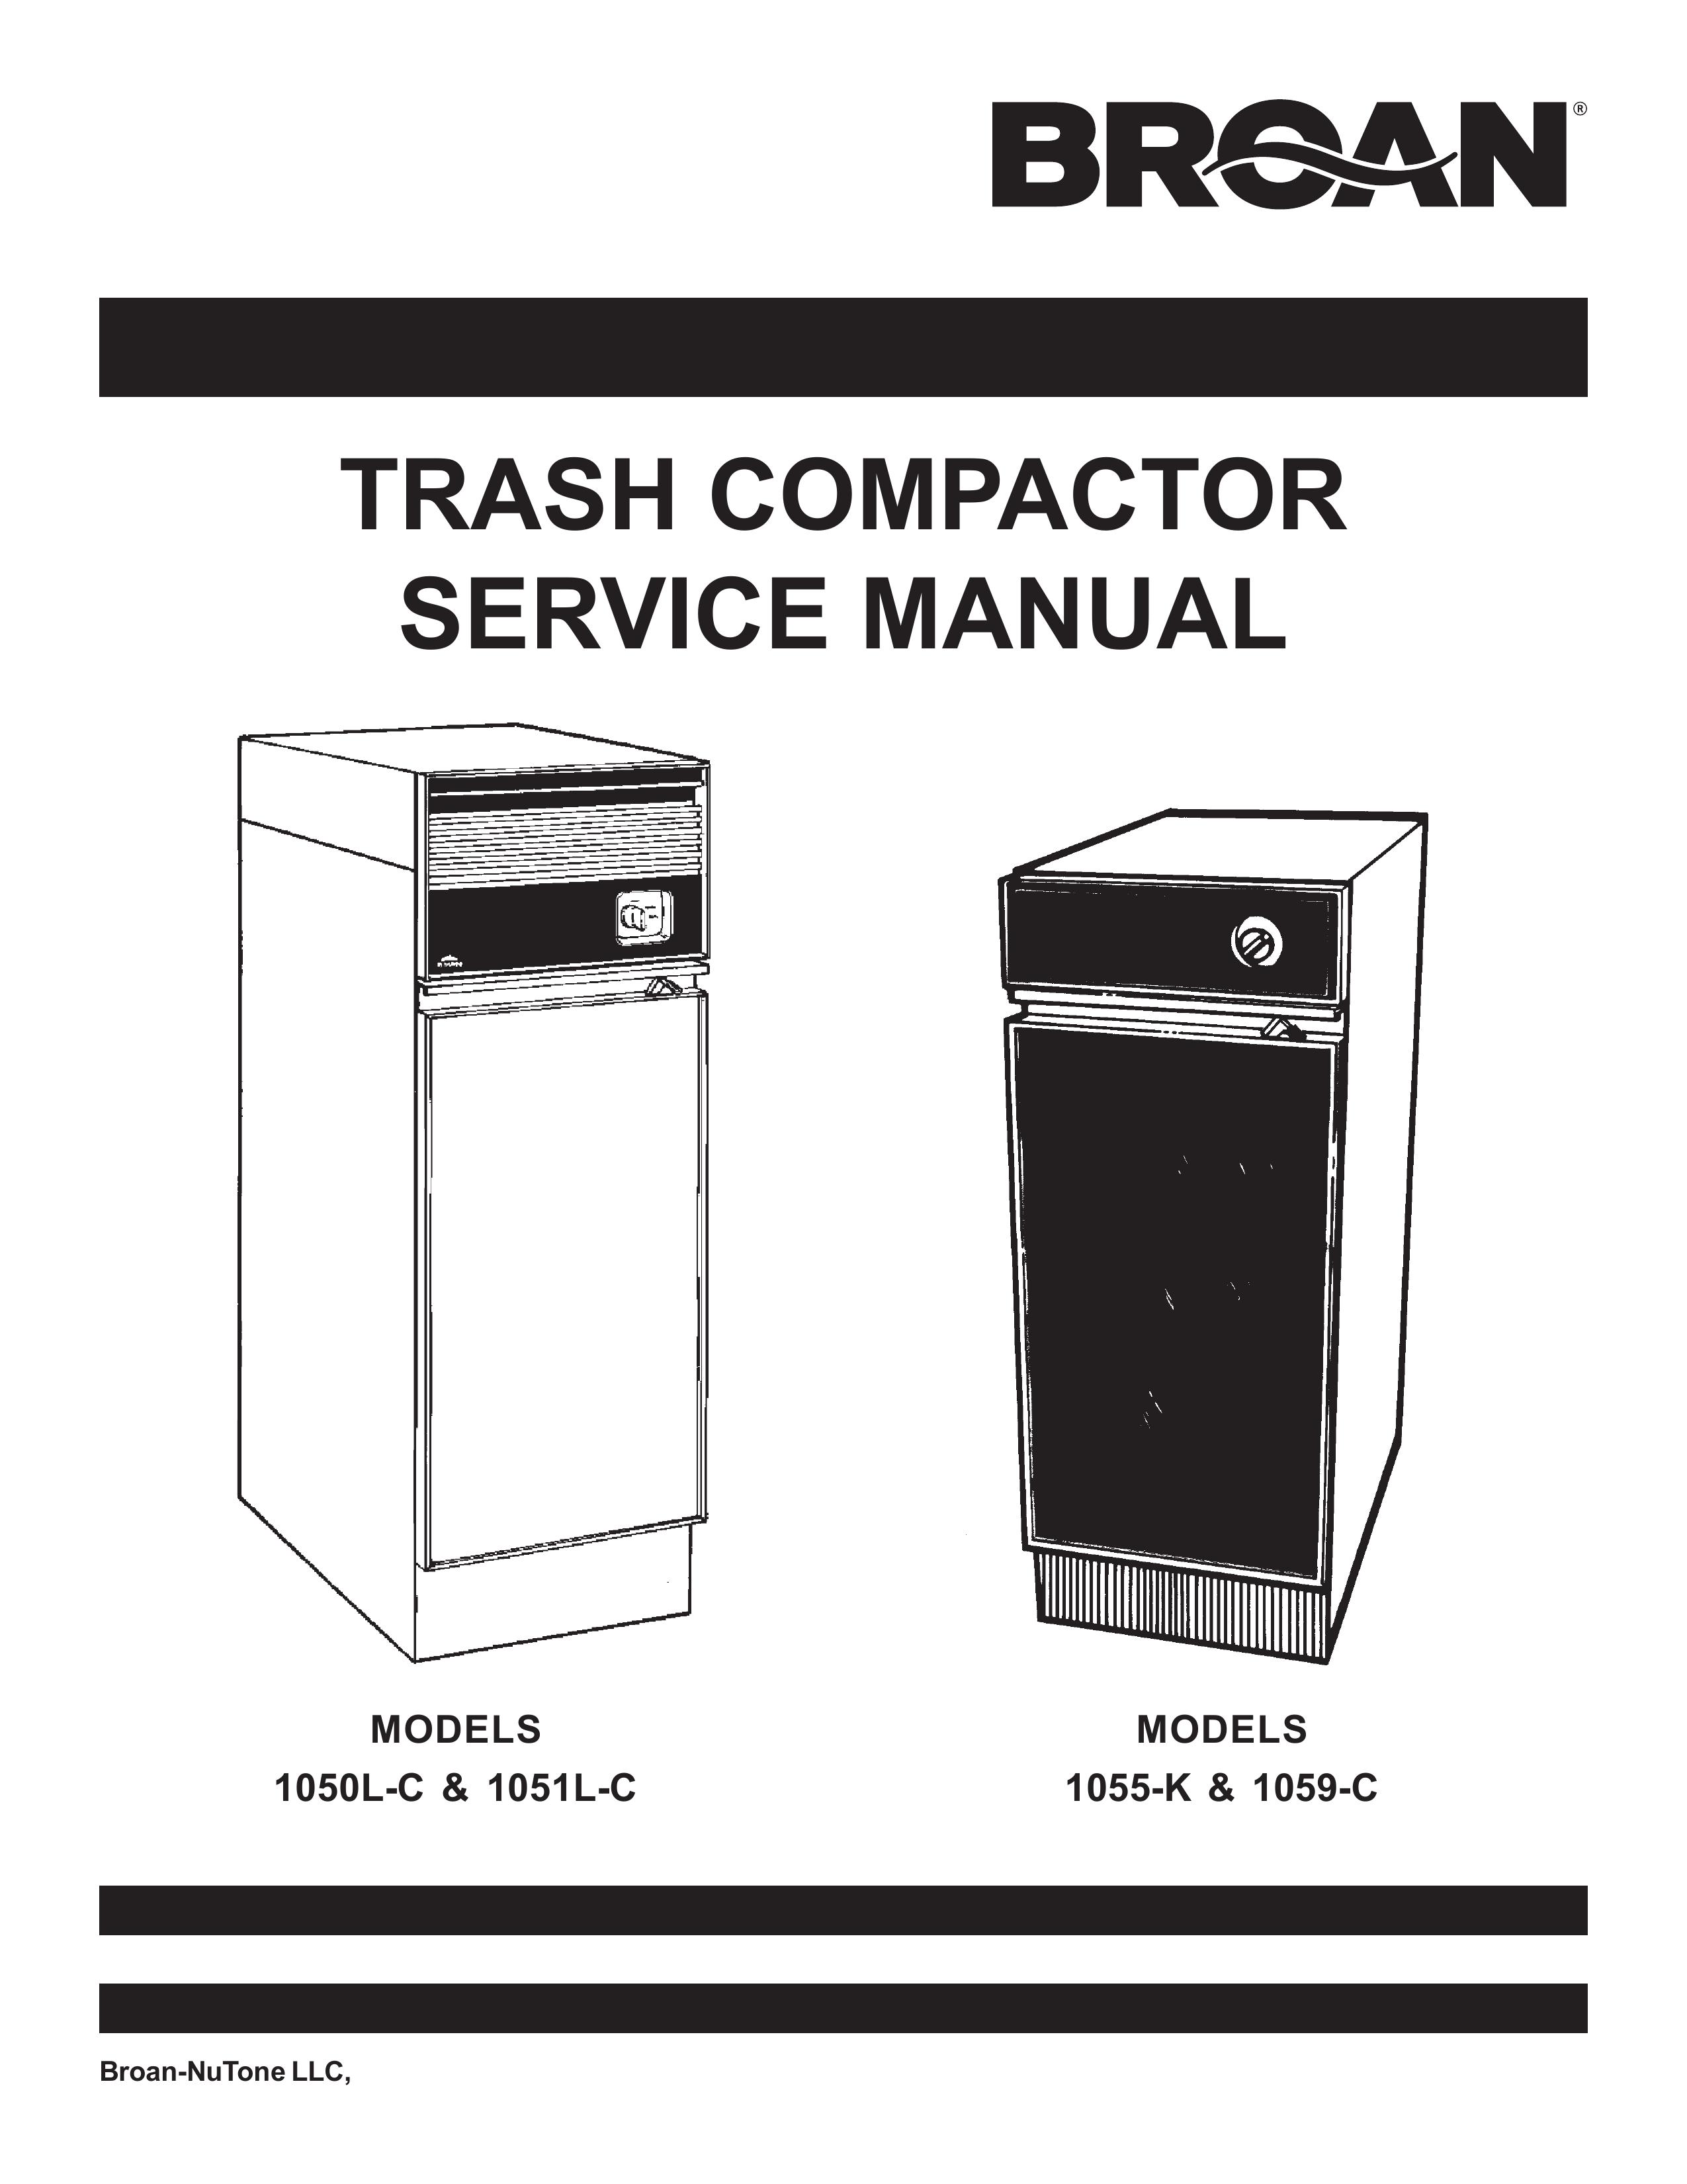 Broan 1051L-C Trash Compactor User Manual